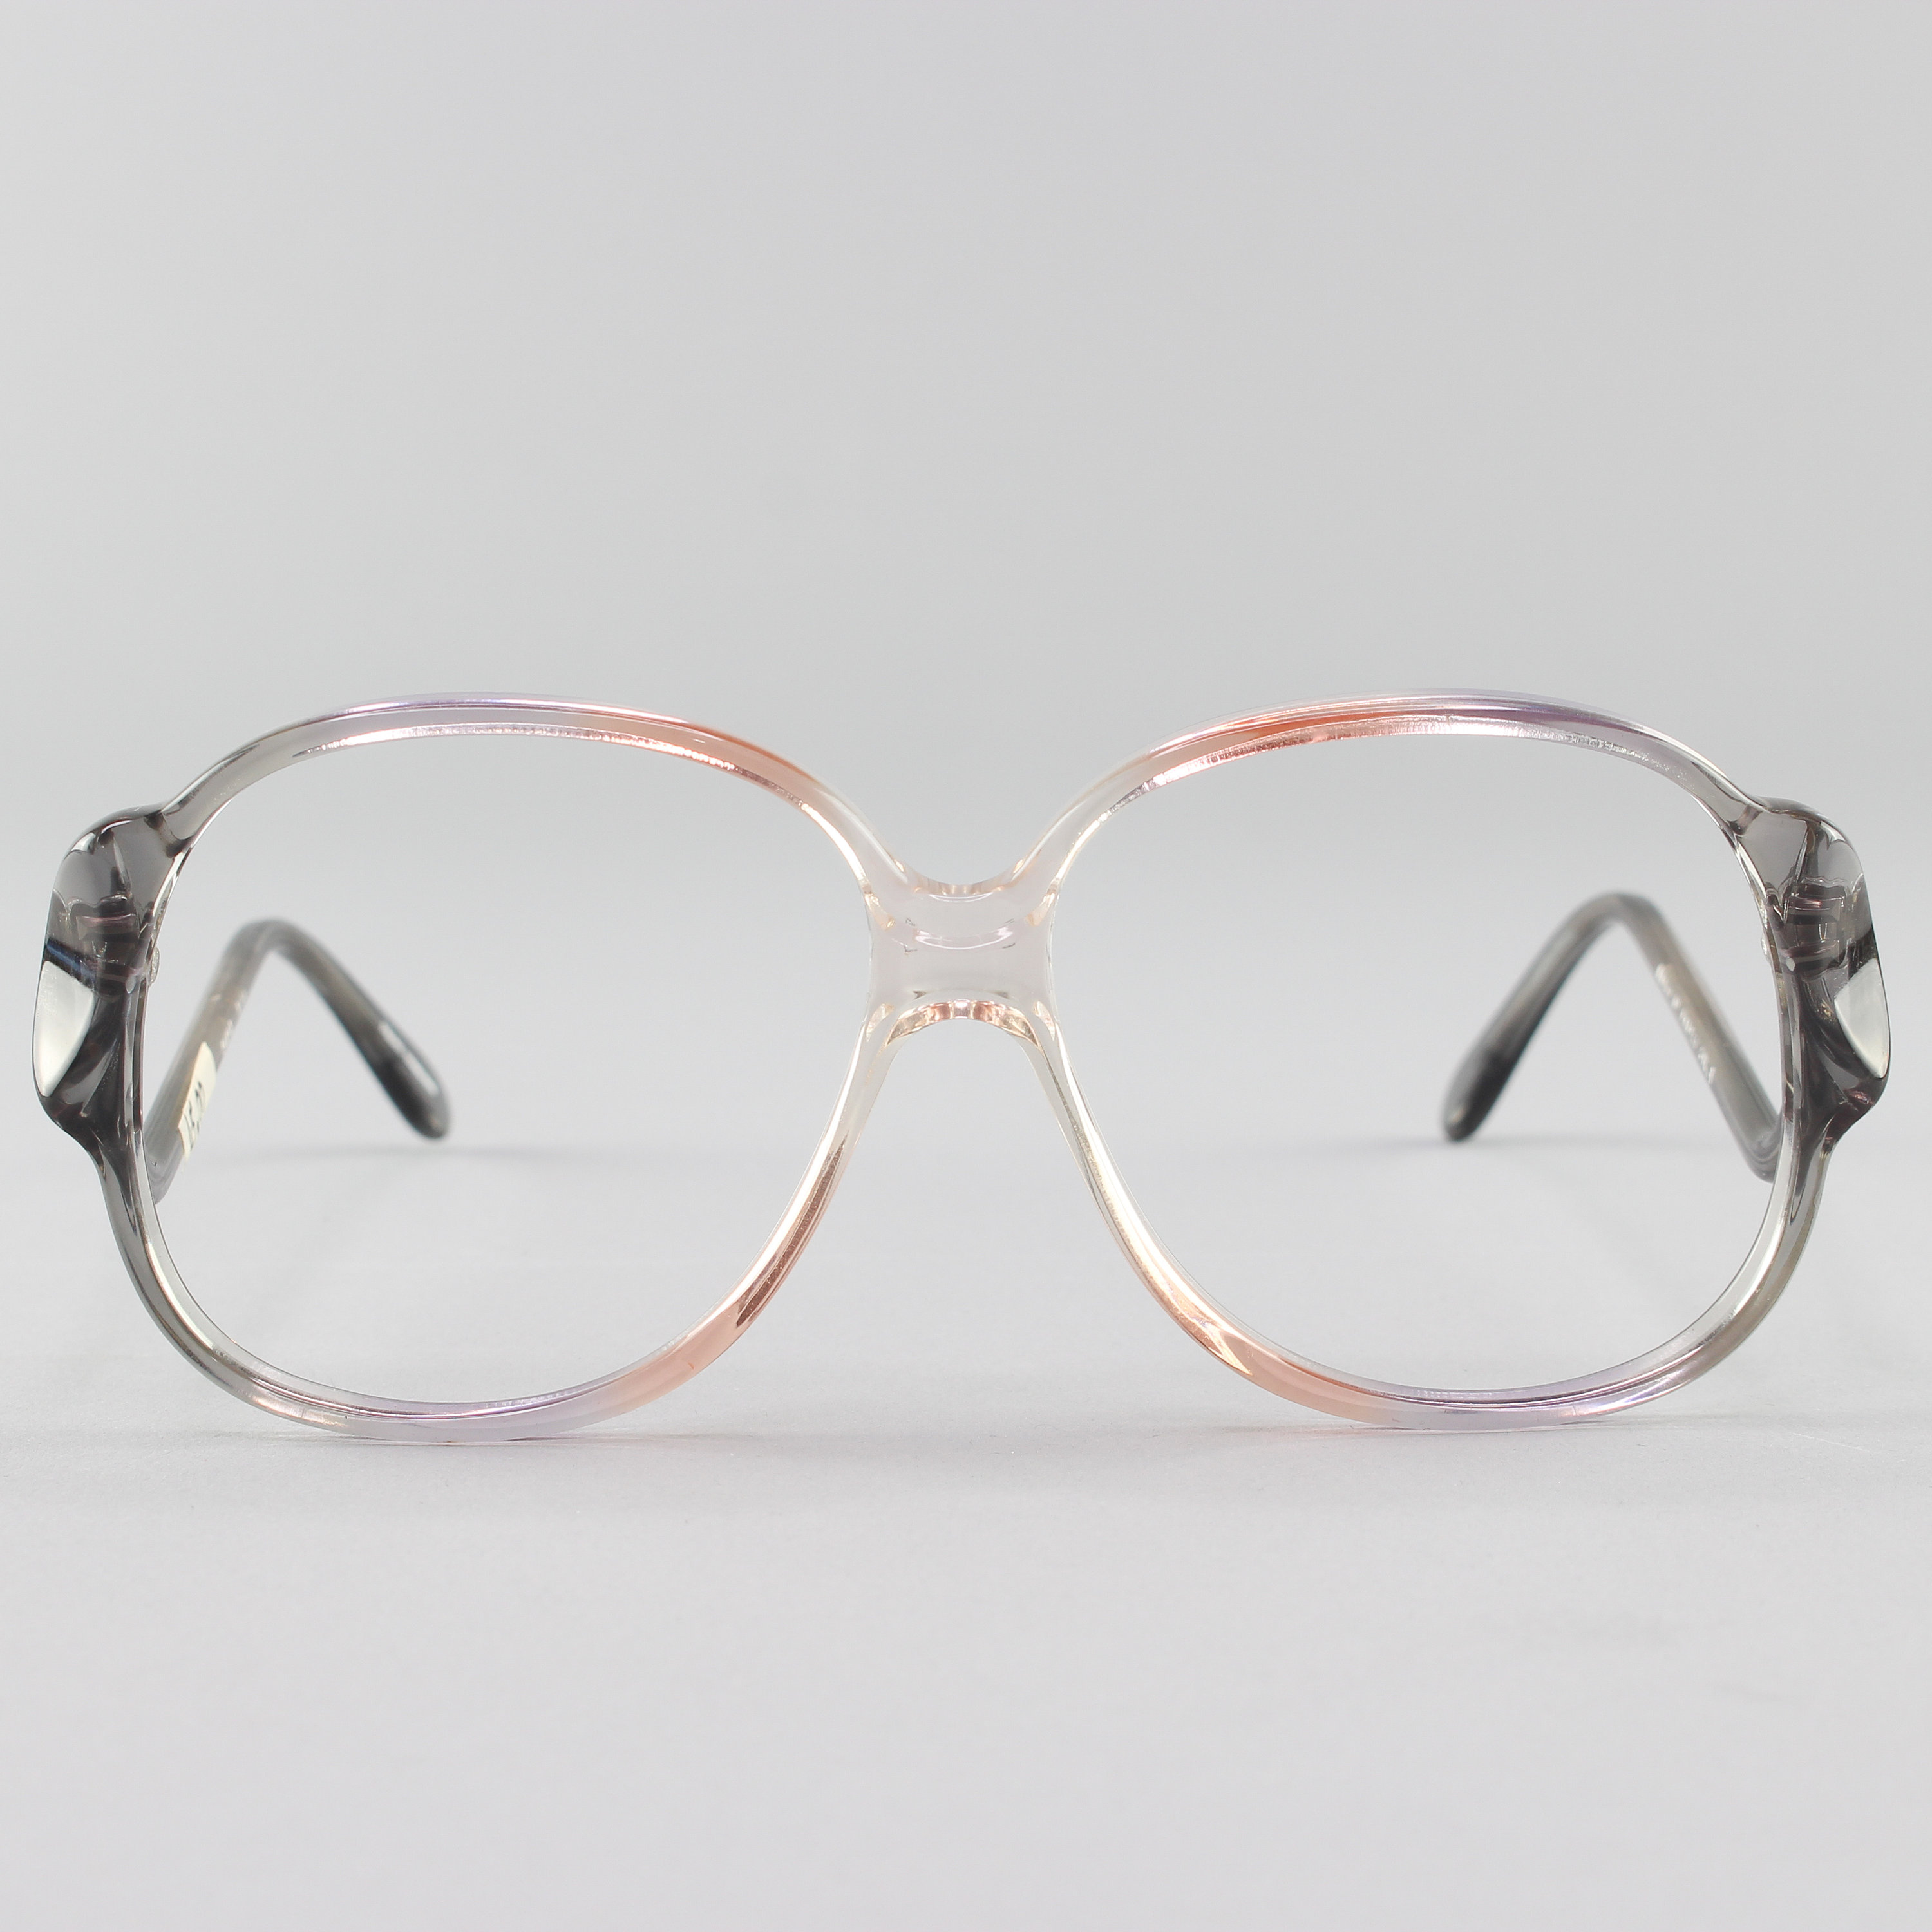 70s Vintage Glasses Clear Round Eyeglass Frame 1970s Oversized